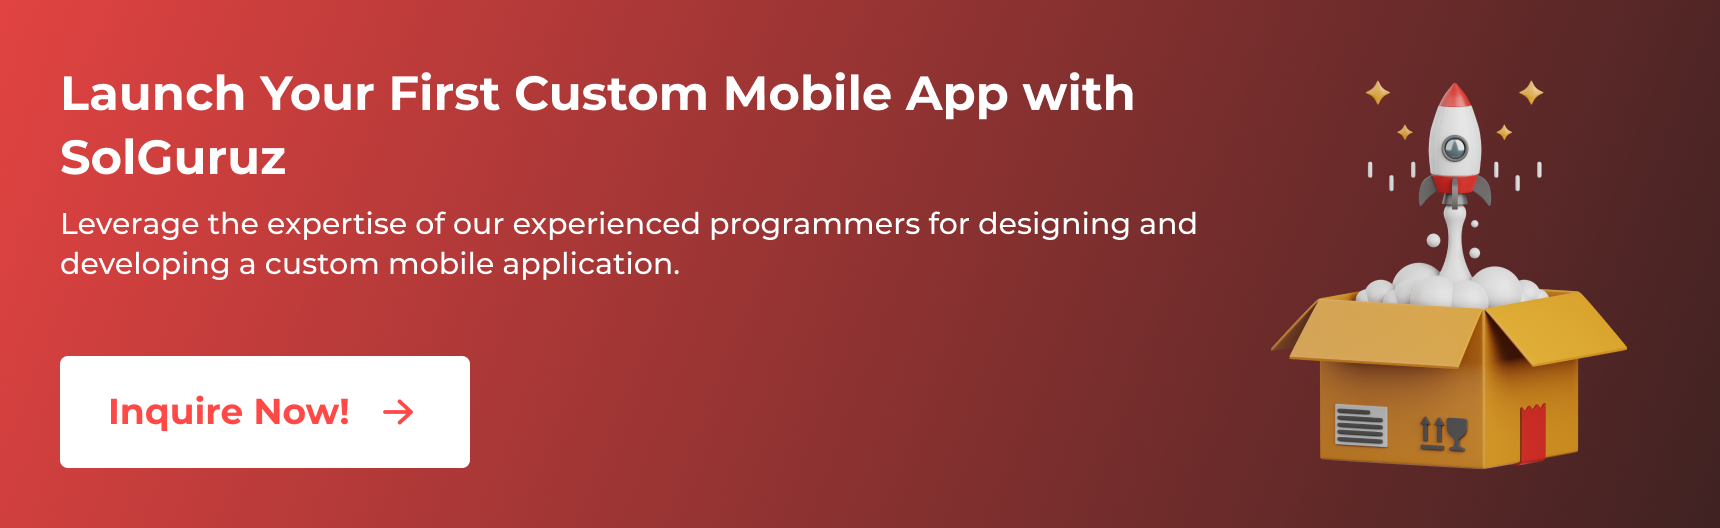 Launch Your First Custom Mobile App with SolGuruz